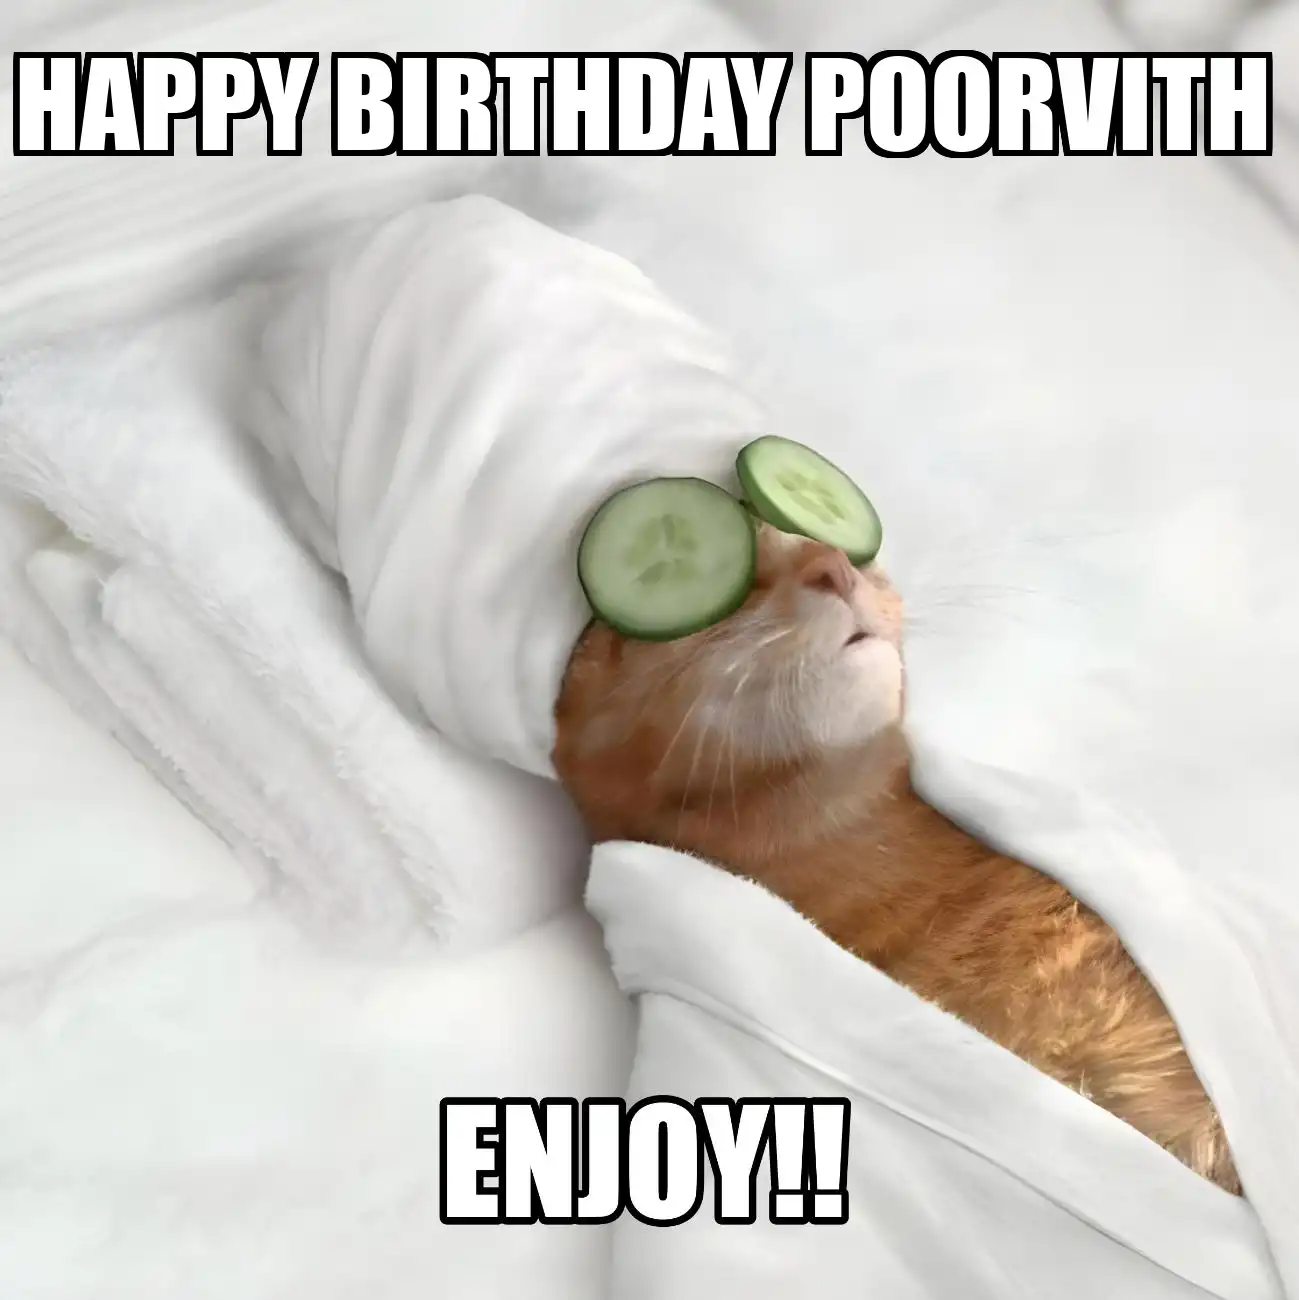 Happy Birthday Poorvith Enjoy Cat Meme